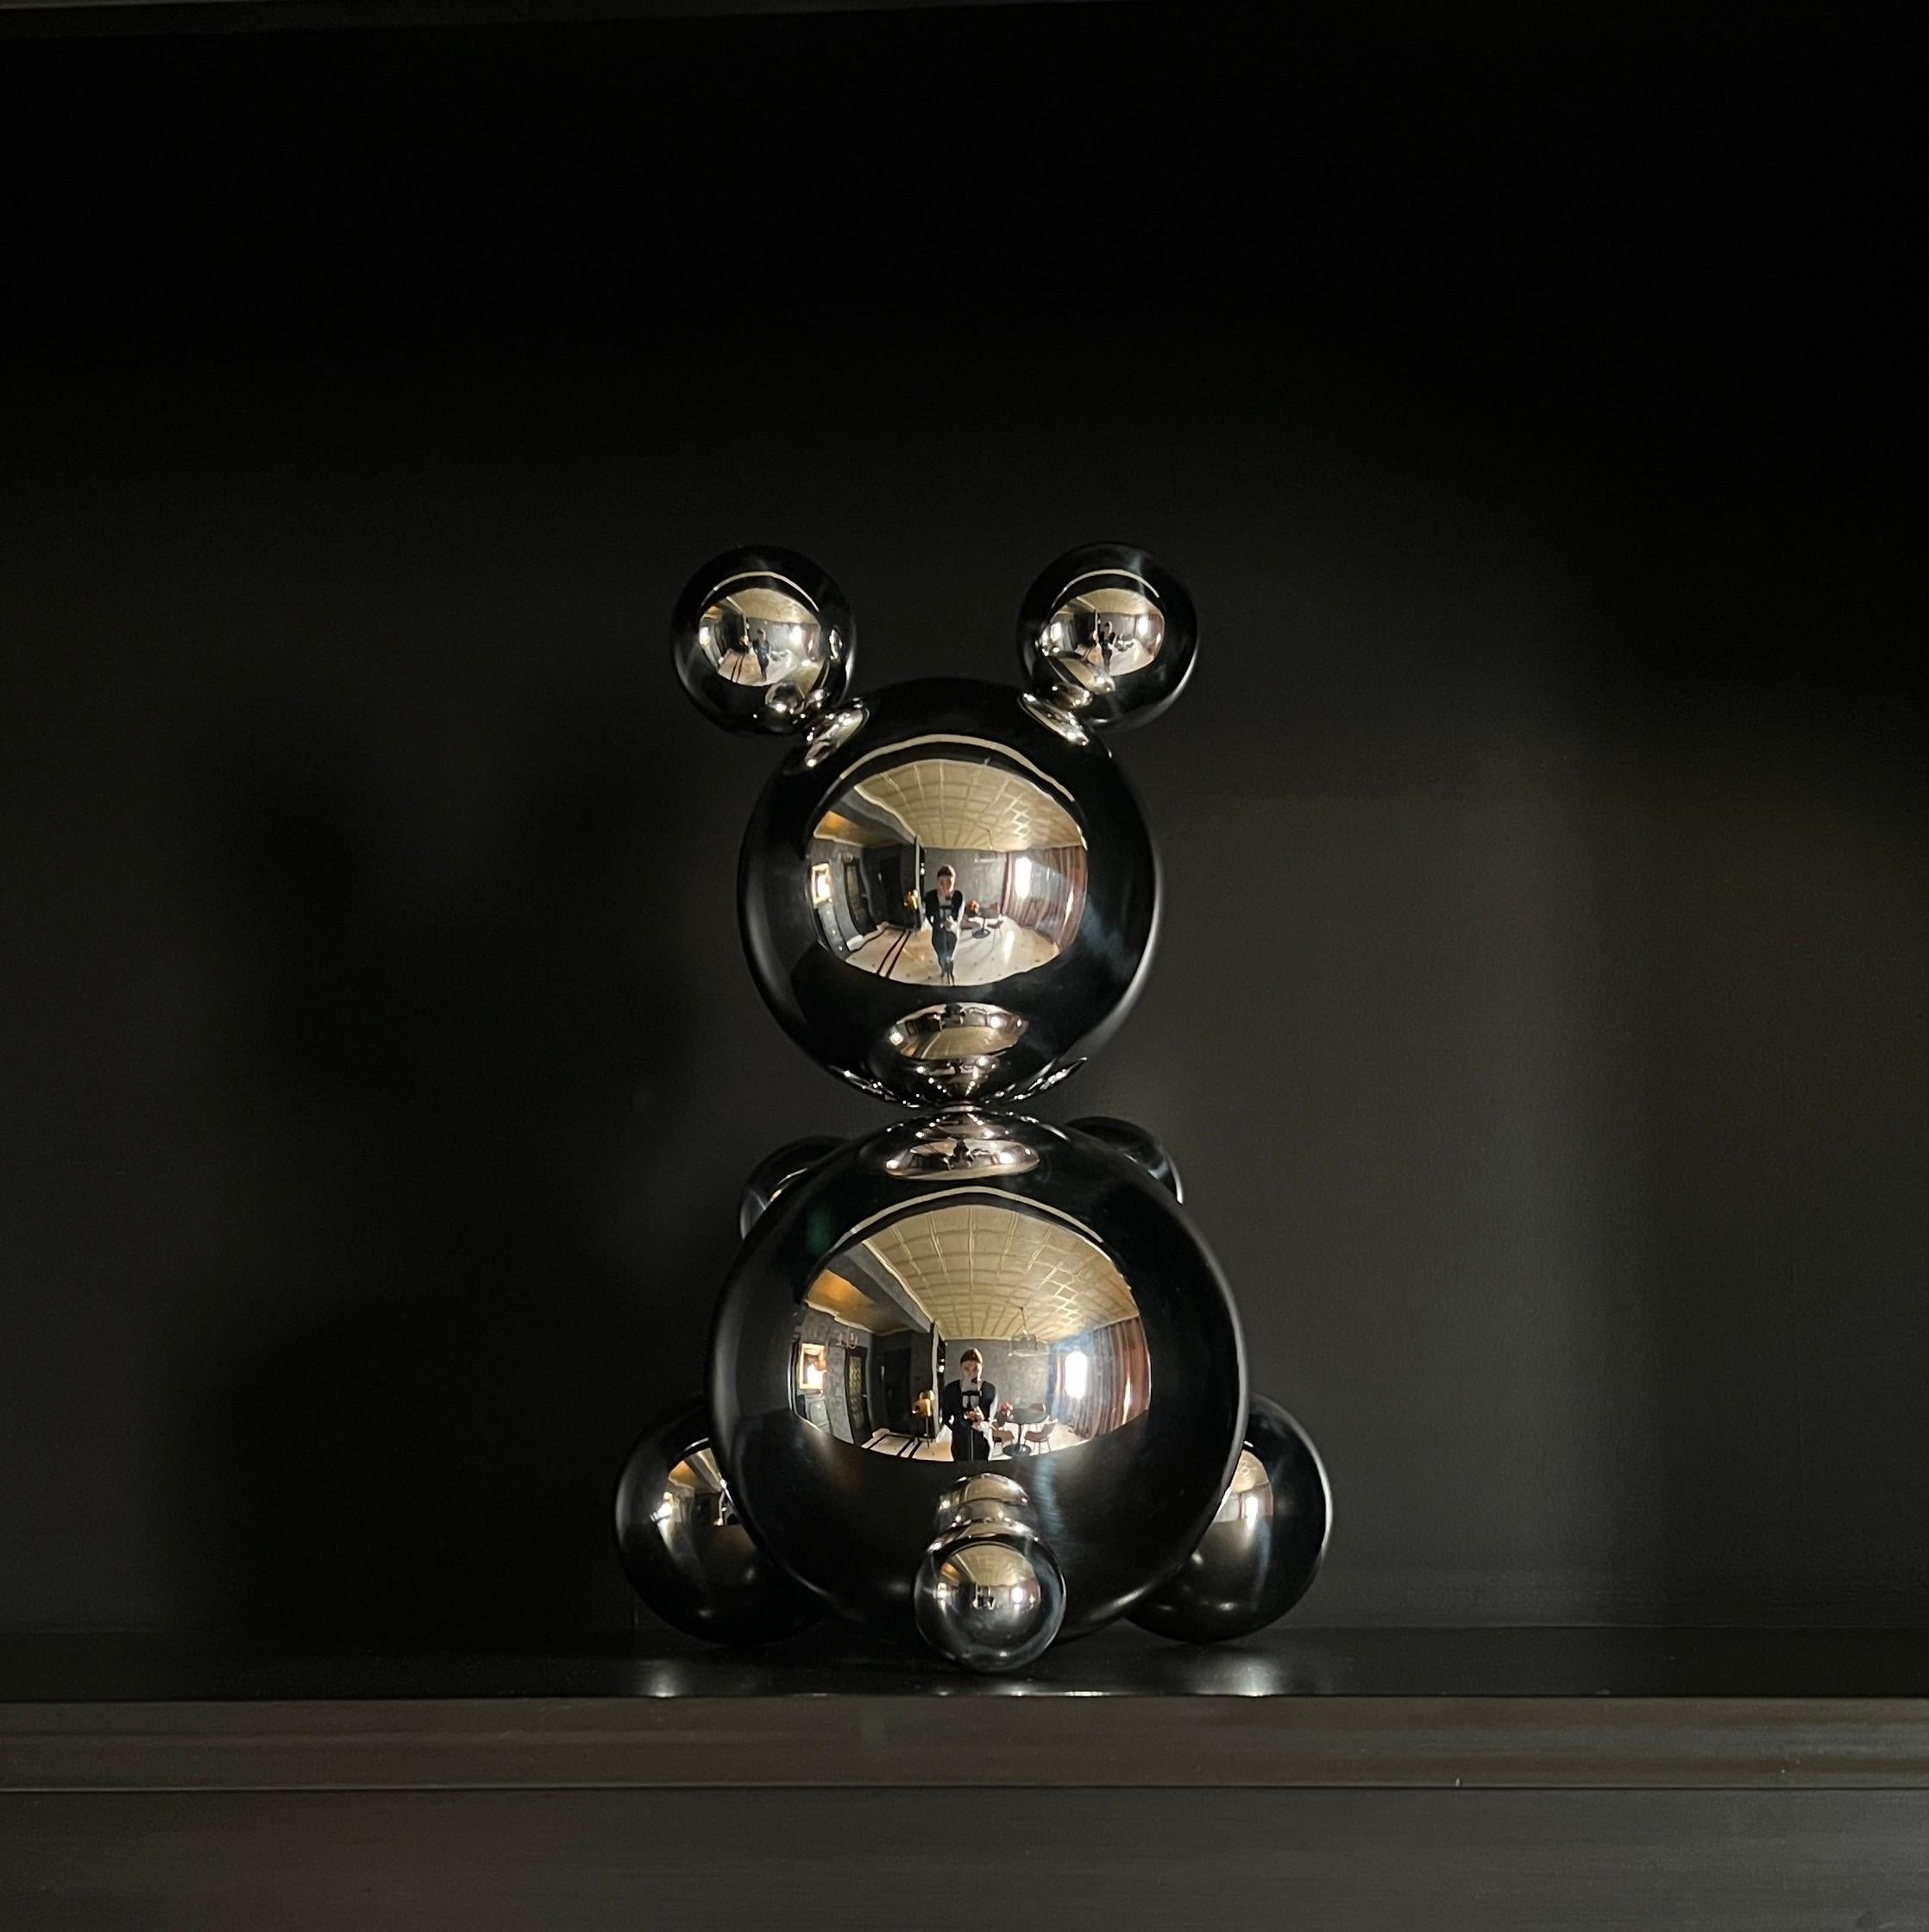 Middle Stainless Steel Bear 'James' Sculpture Minimalistic Animal 2